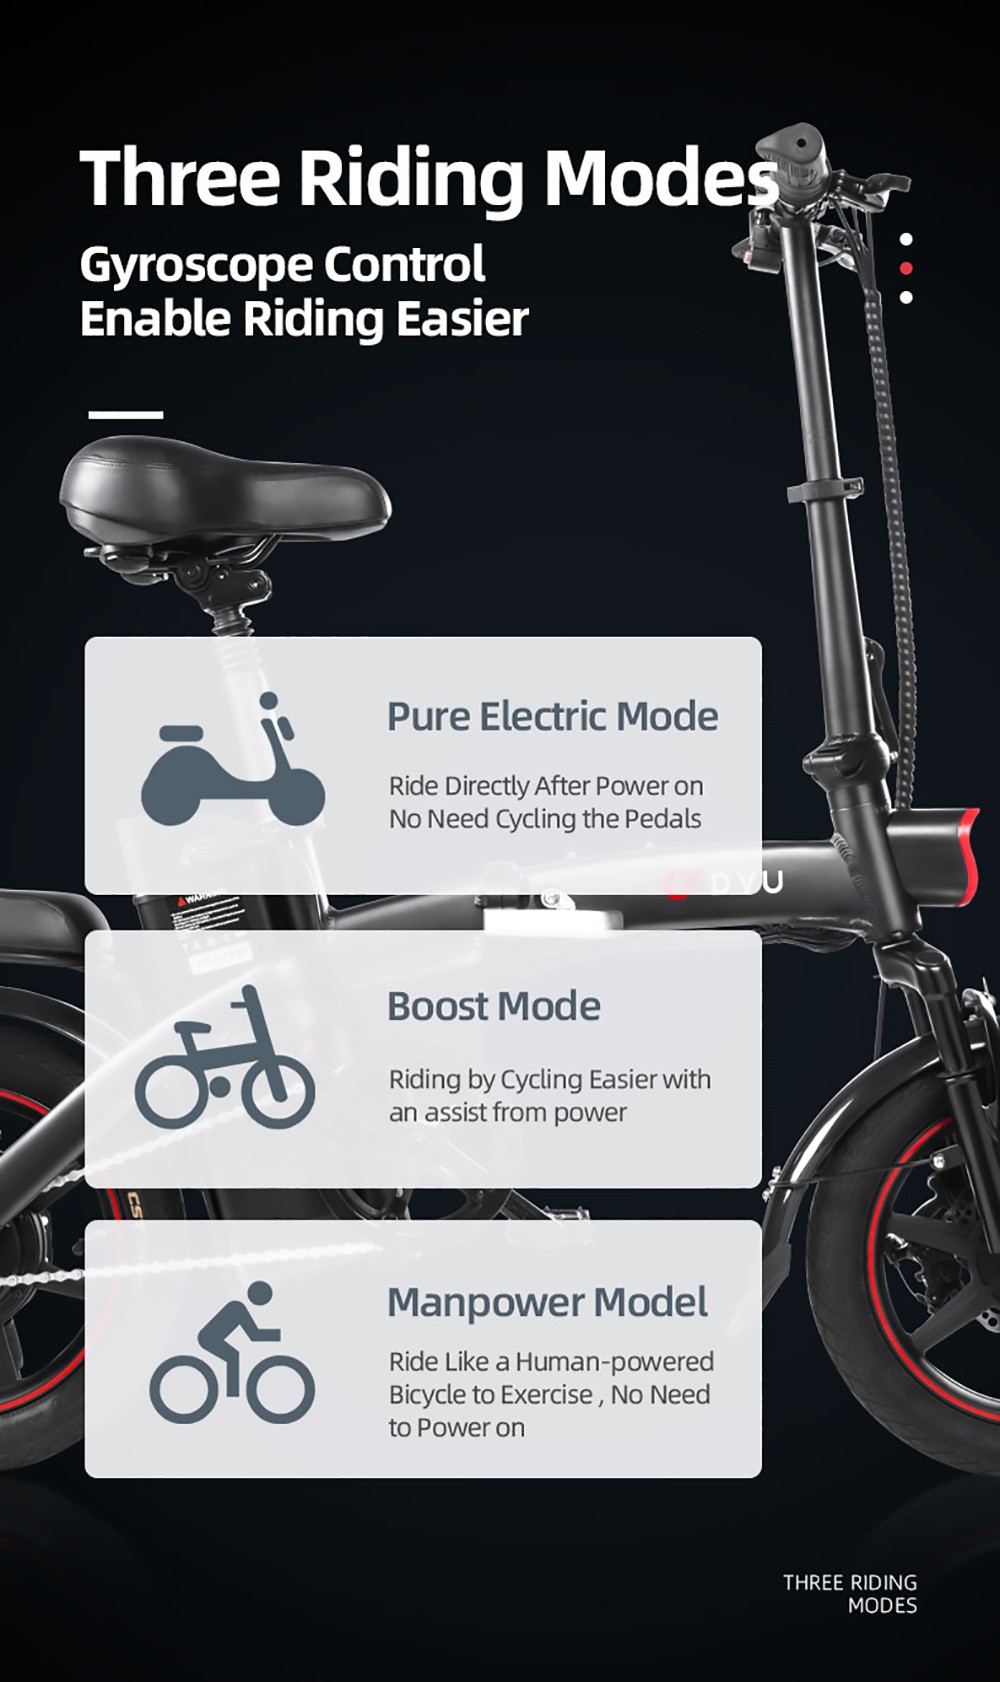 DYU A5 Elektrische fiets 350W Motor Max. snelheid 25km/h 36V 7.5Ah Batterij 70km Max. bereik - Wit